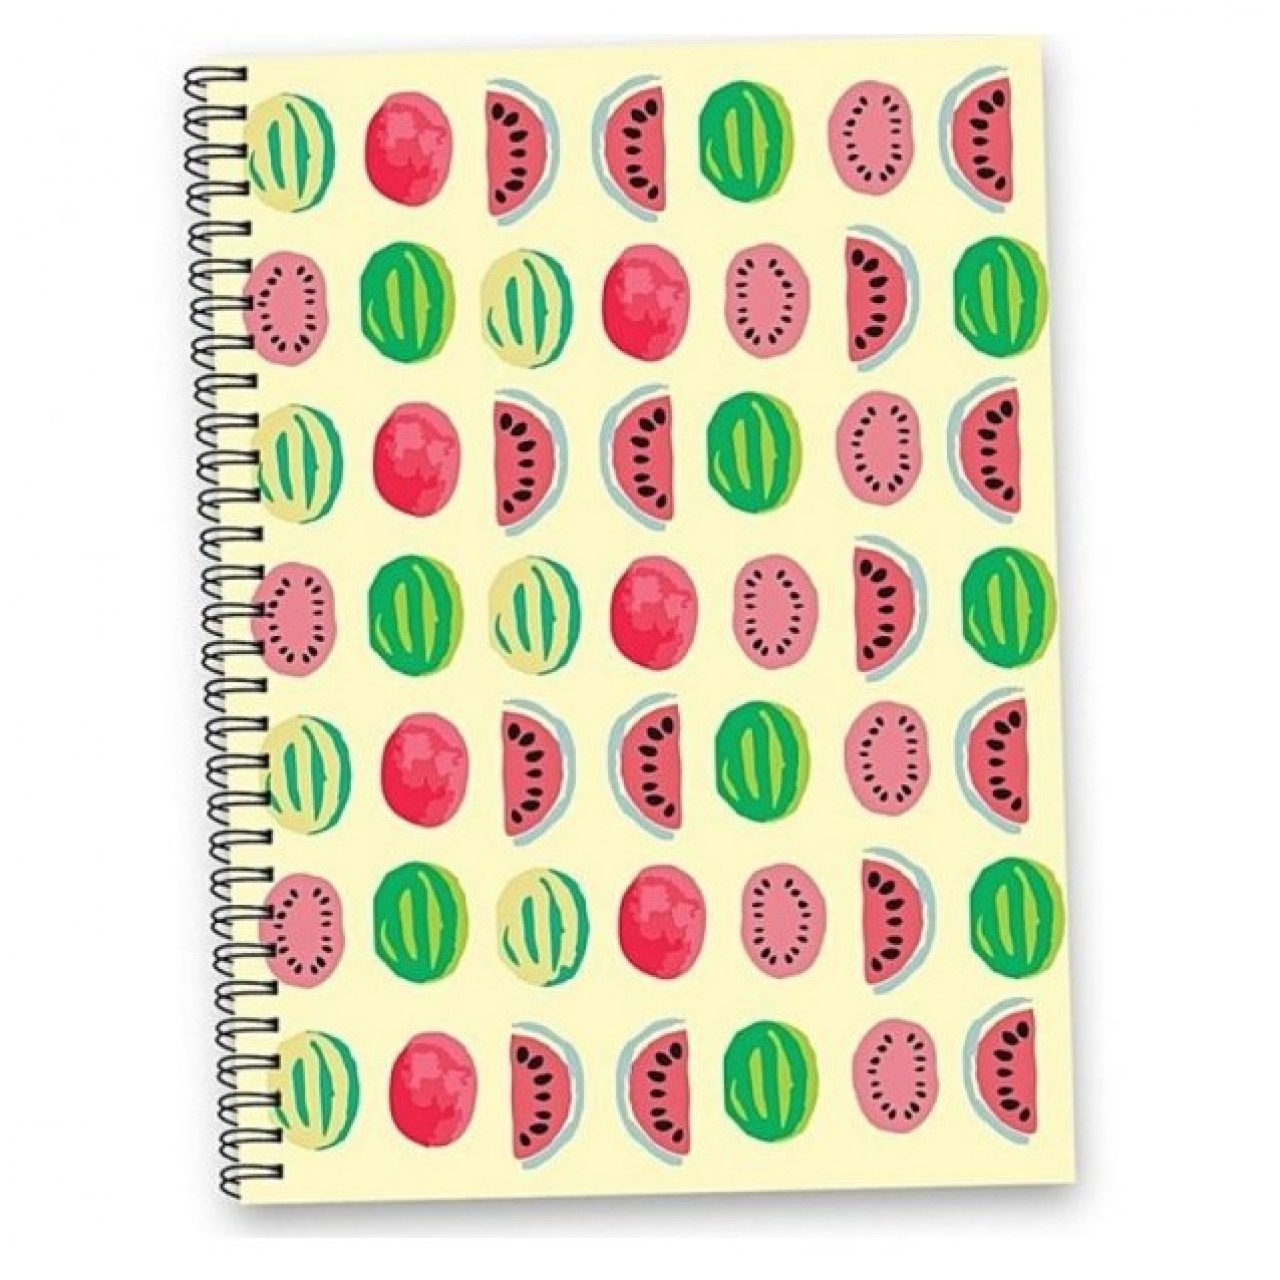 Excel Watermelon Spiral Notebook For School & College